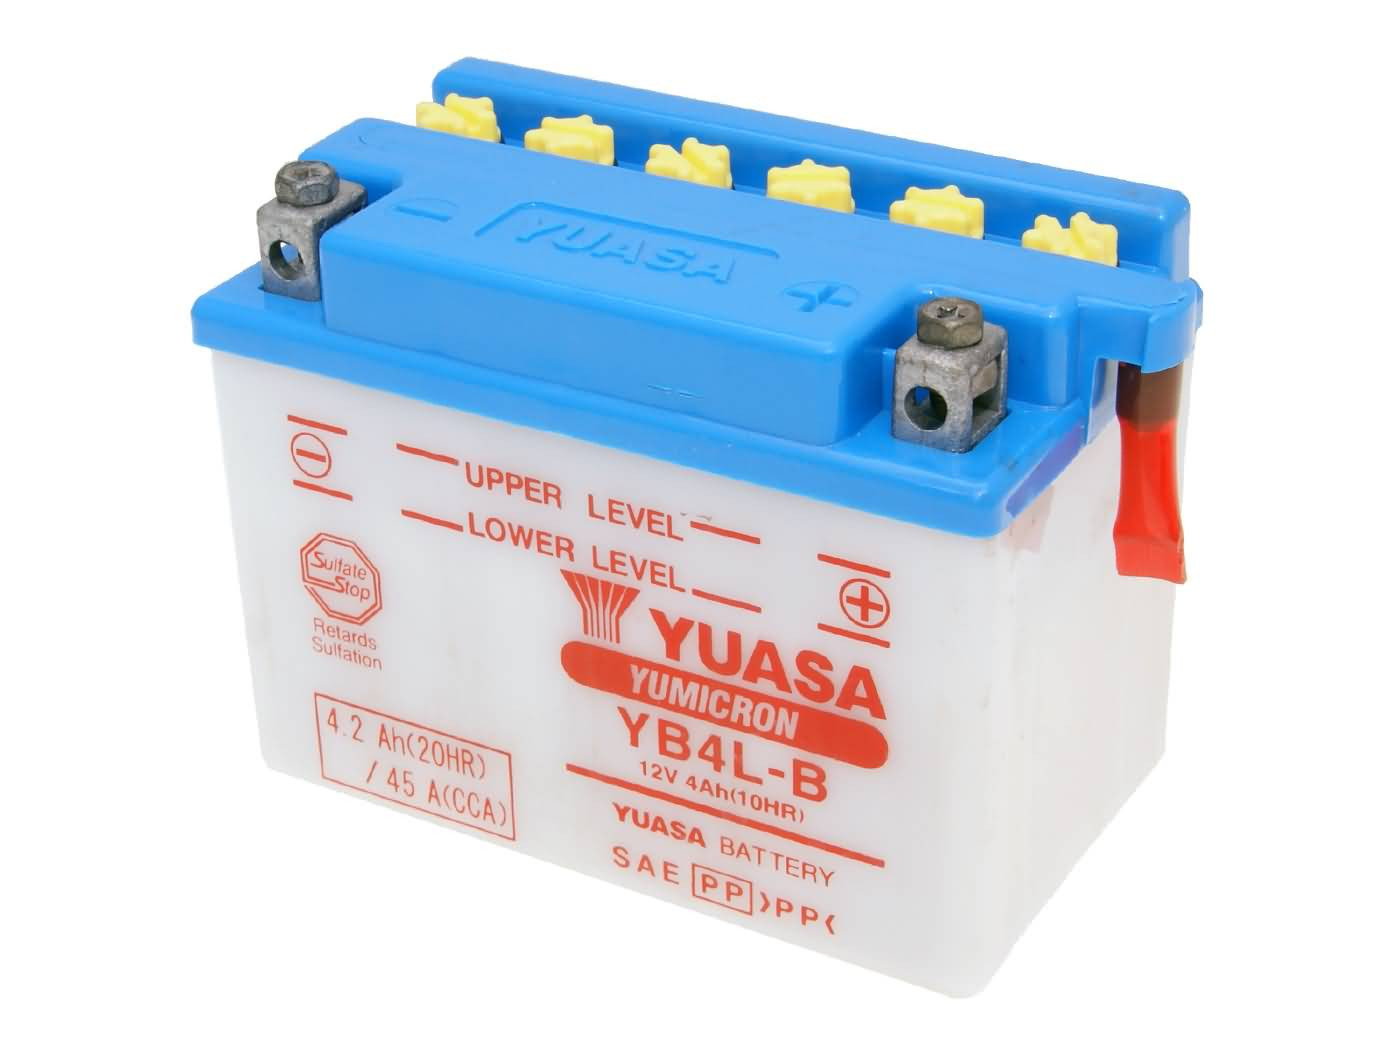 Yuasa YuMicron YB4L-B akkumulátor - savcsomag nélkül